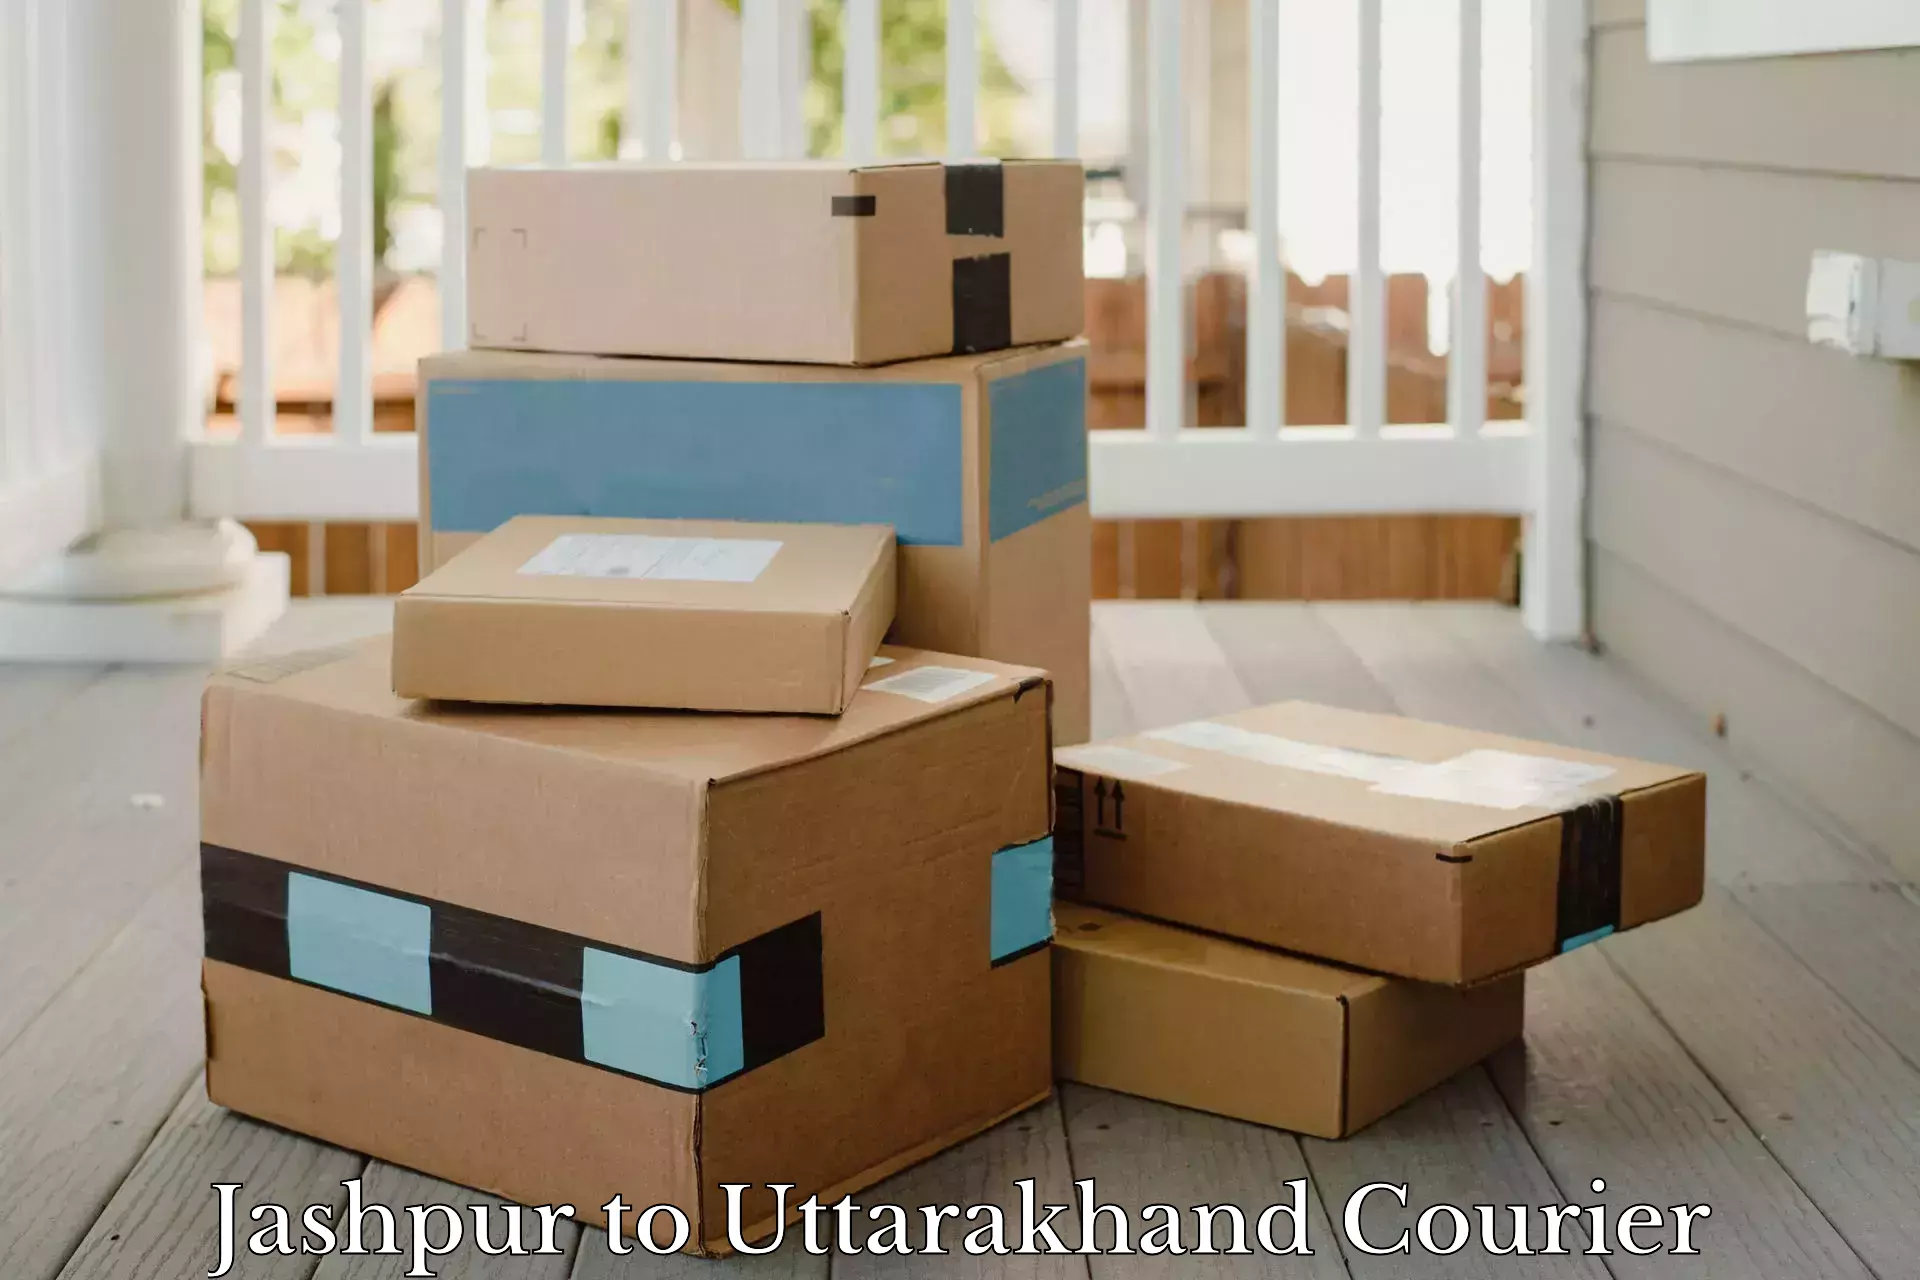 Package delivery network Jashpur to Tehri Garhwal